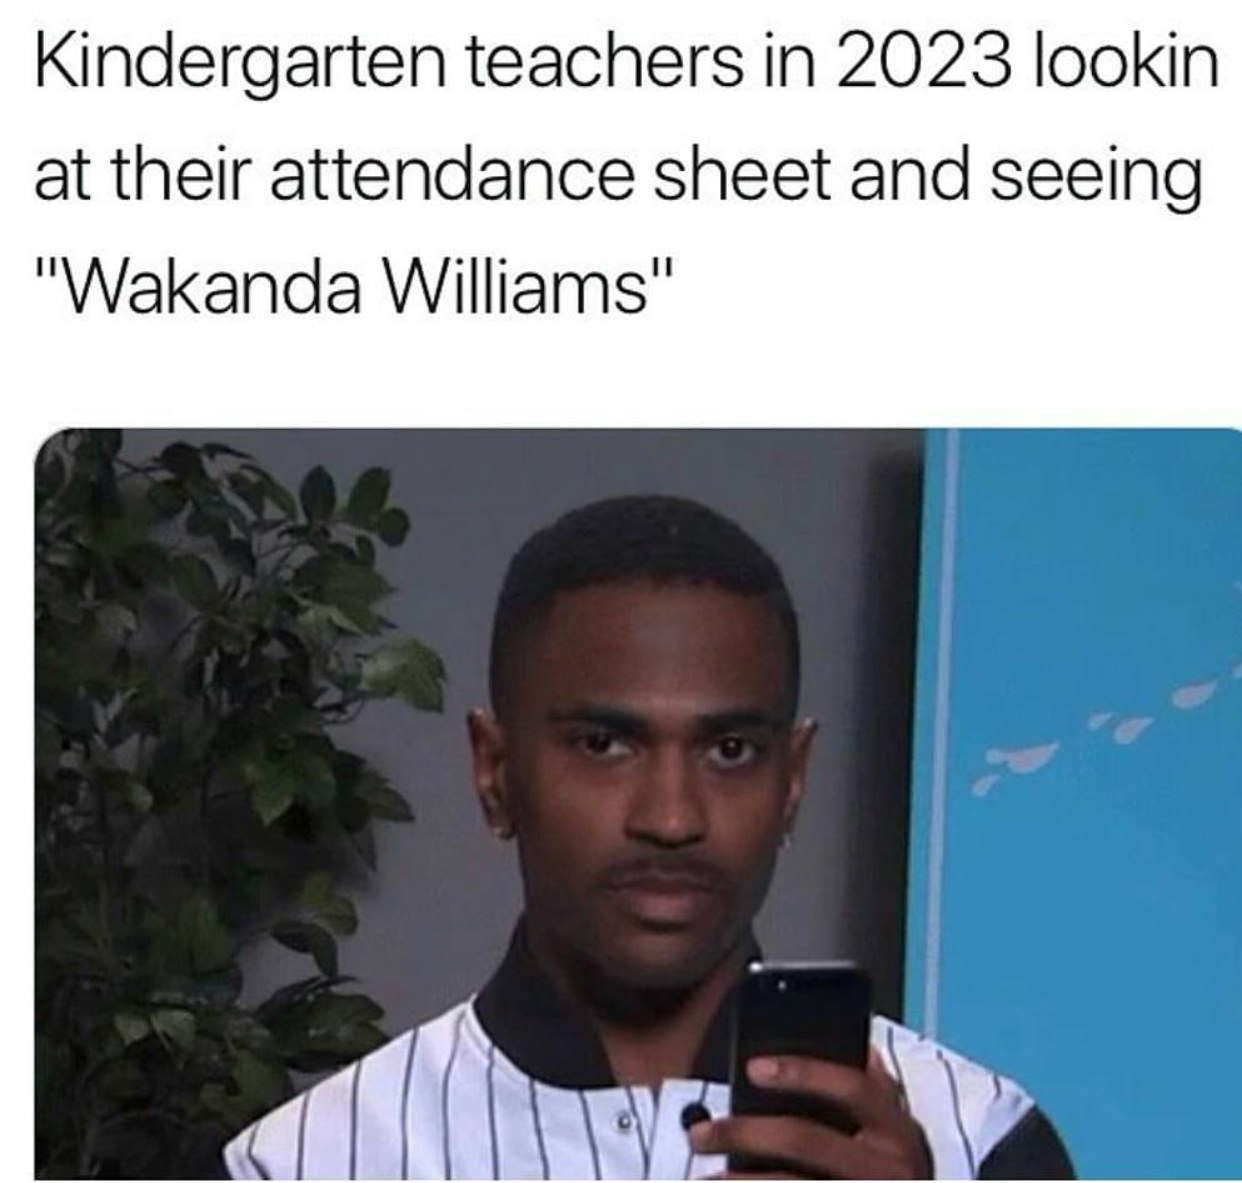 guy looking at phone meme - Kindergarten teachers in 2023 lookin at their attendance sheet and seeing "Wakanda Williams"